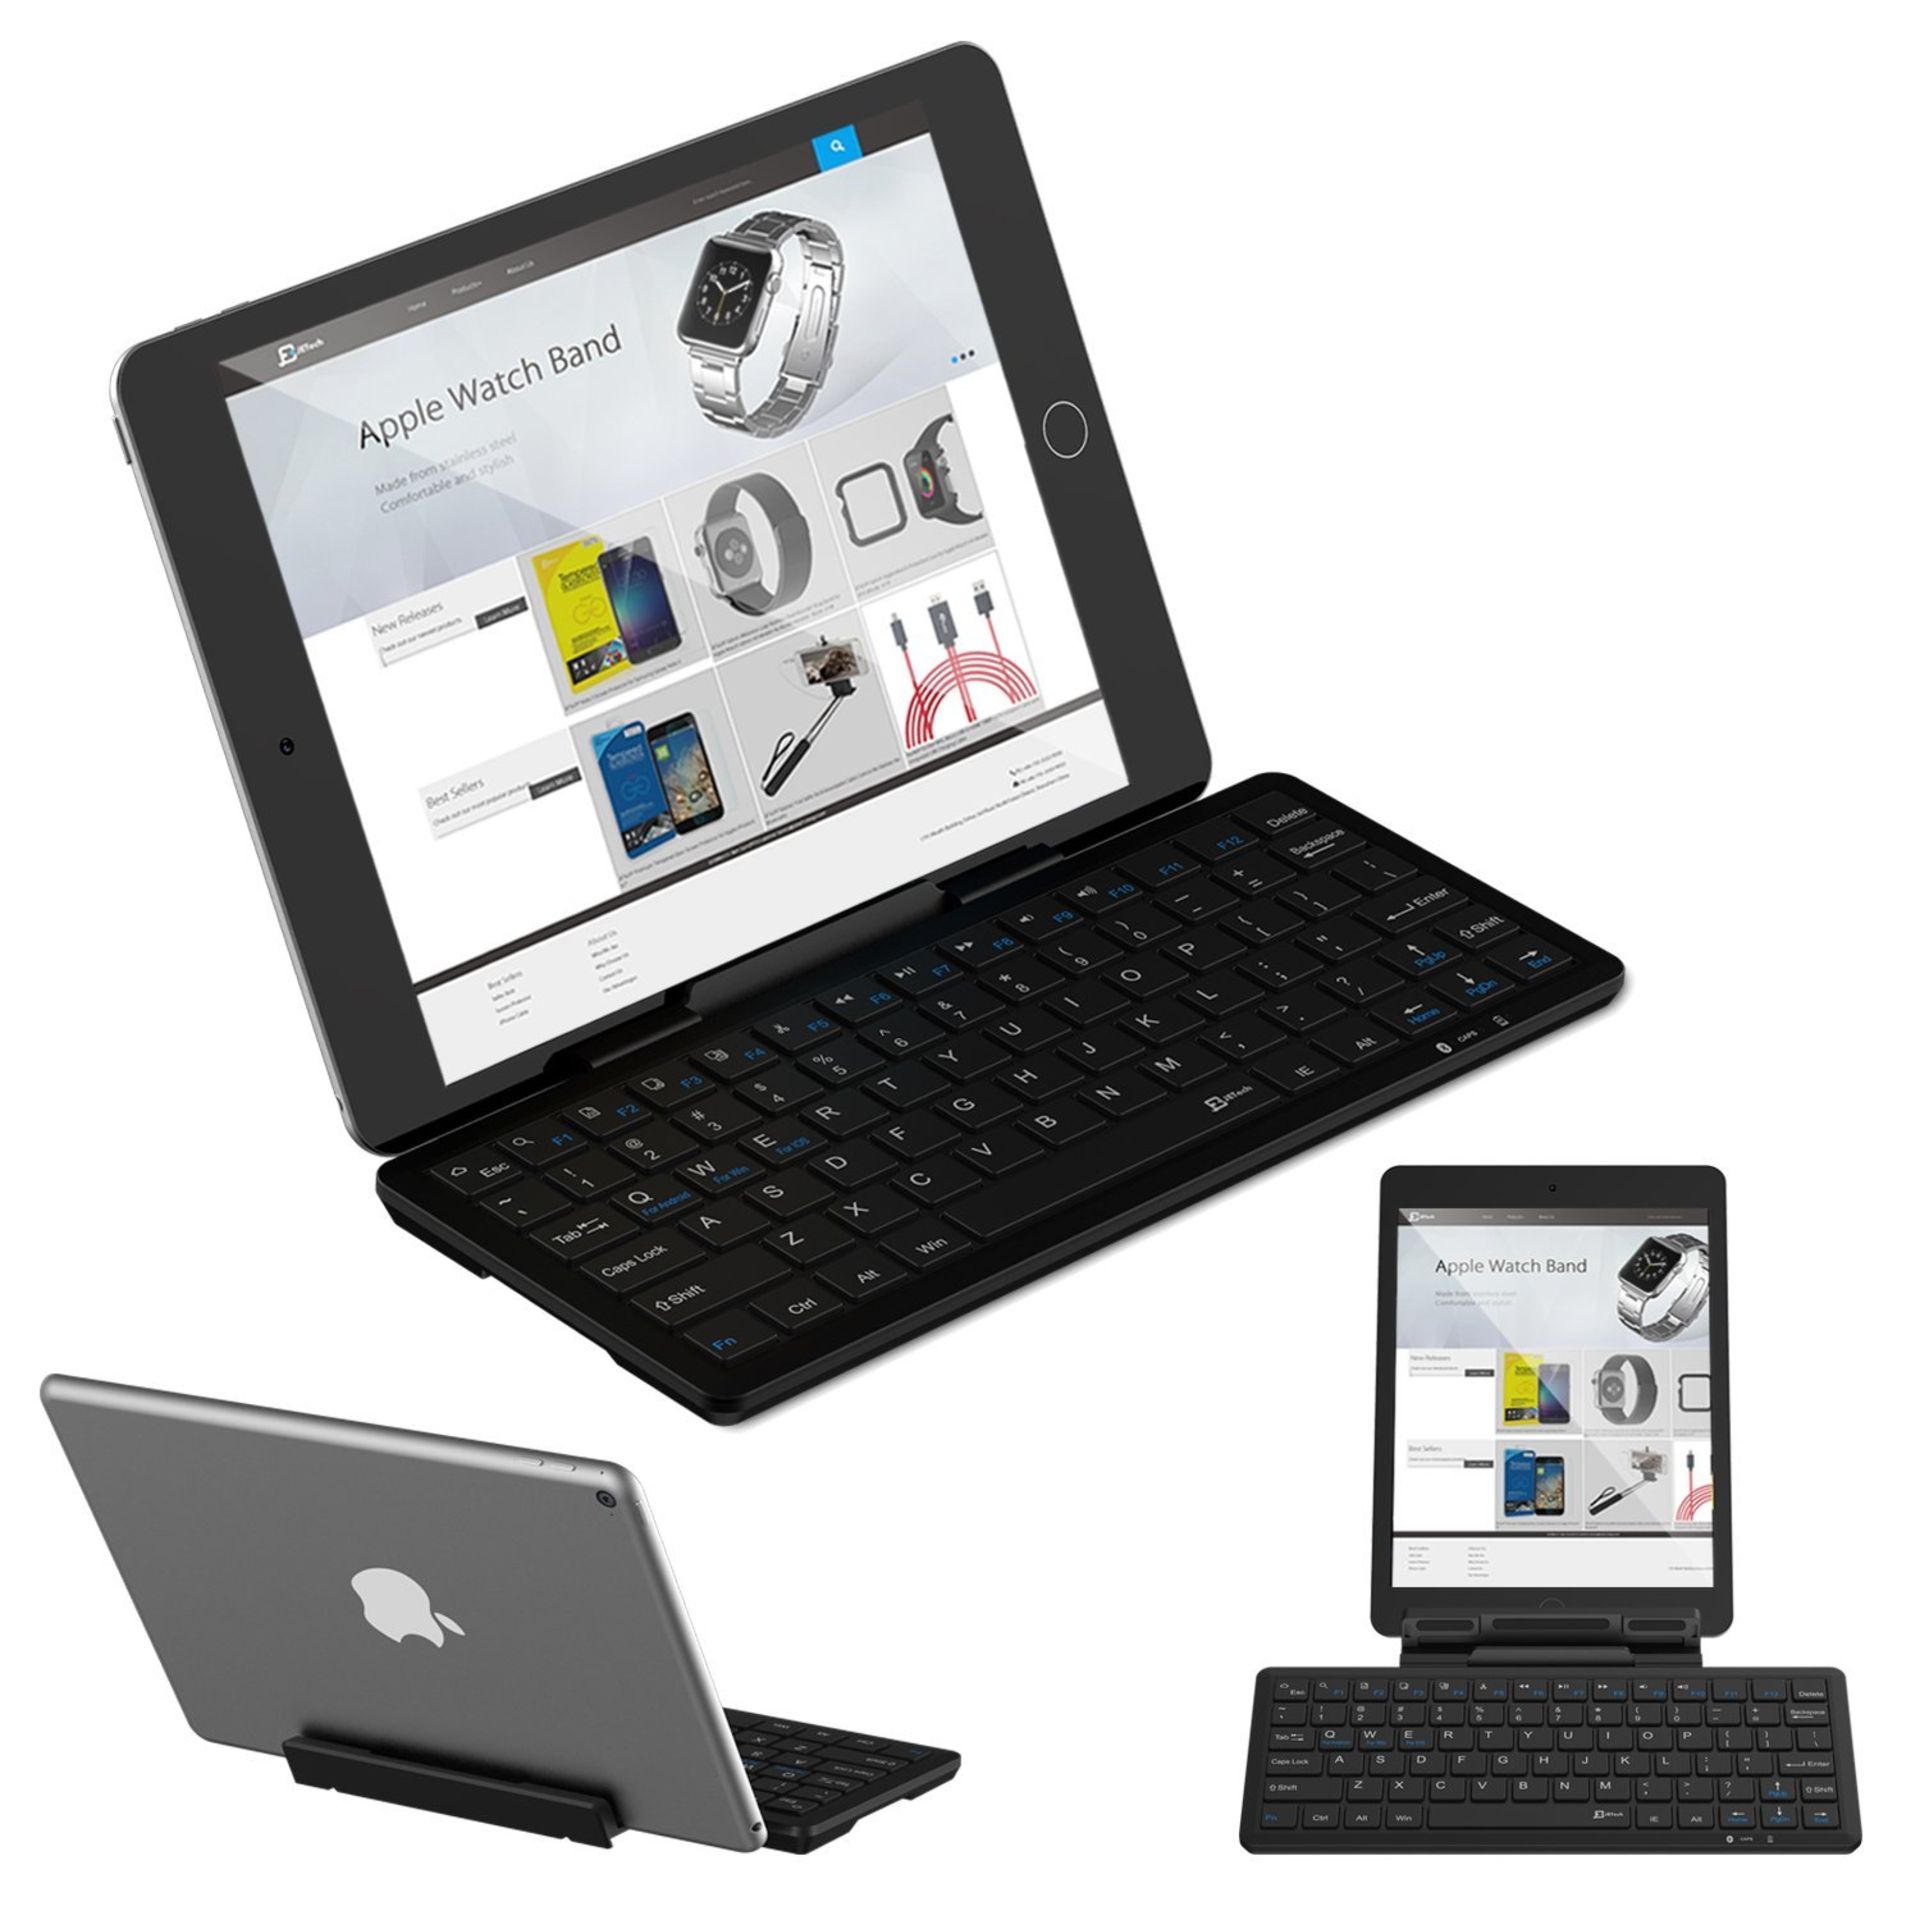 V *TRADE QTY* Brand New Tragbare Universal Bluetooth Keyboard Amazon Price £14.95 X 3 YOUR BID PRICE